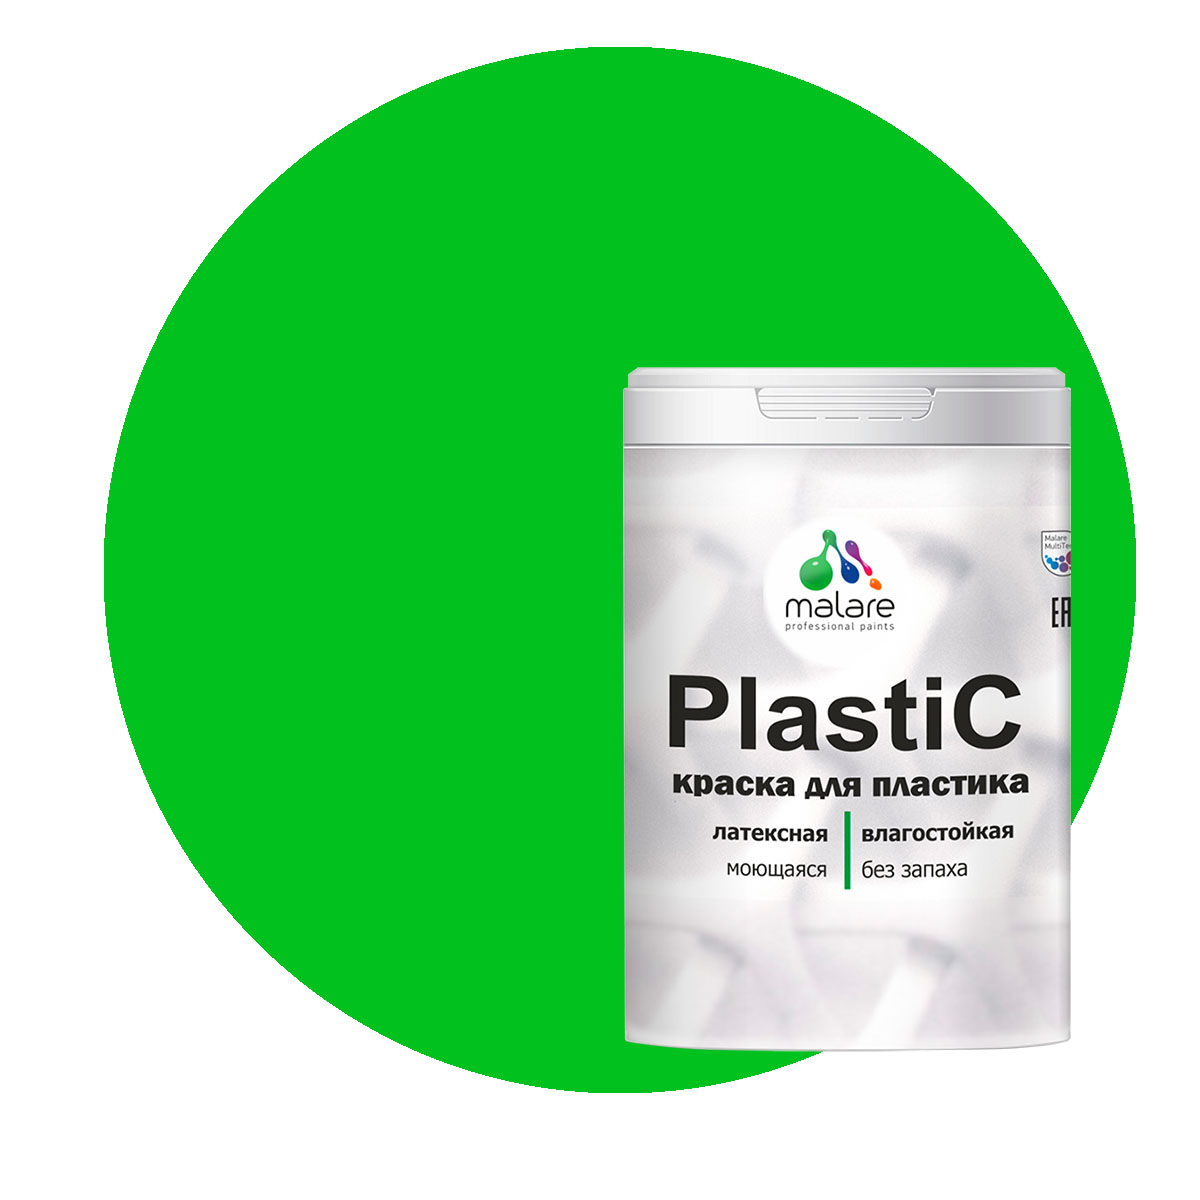 Краска Malare PlastiC для пластика, ПВХ, для сайдинга, освежающий зеленый 2 кг.